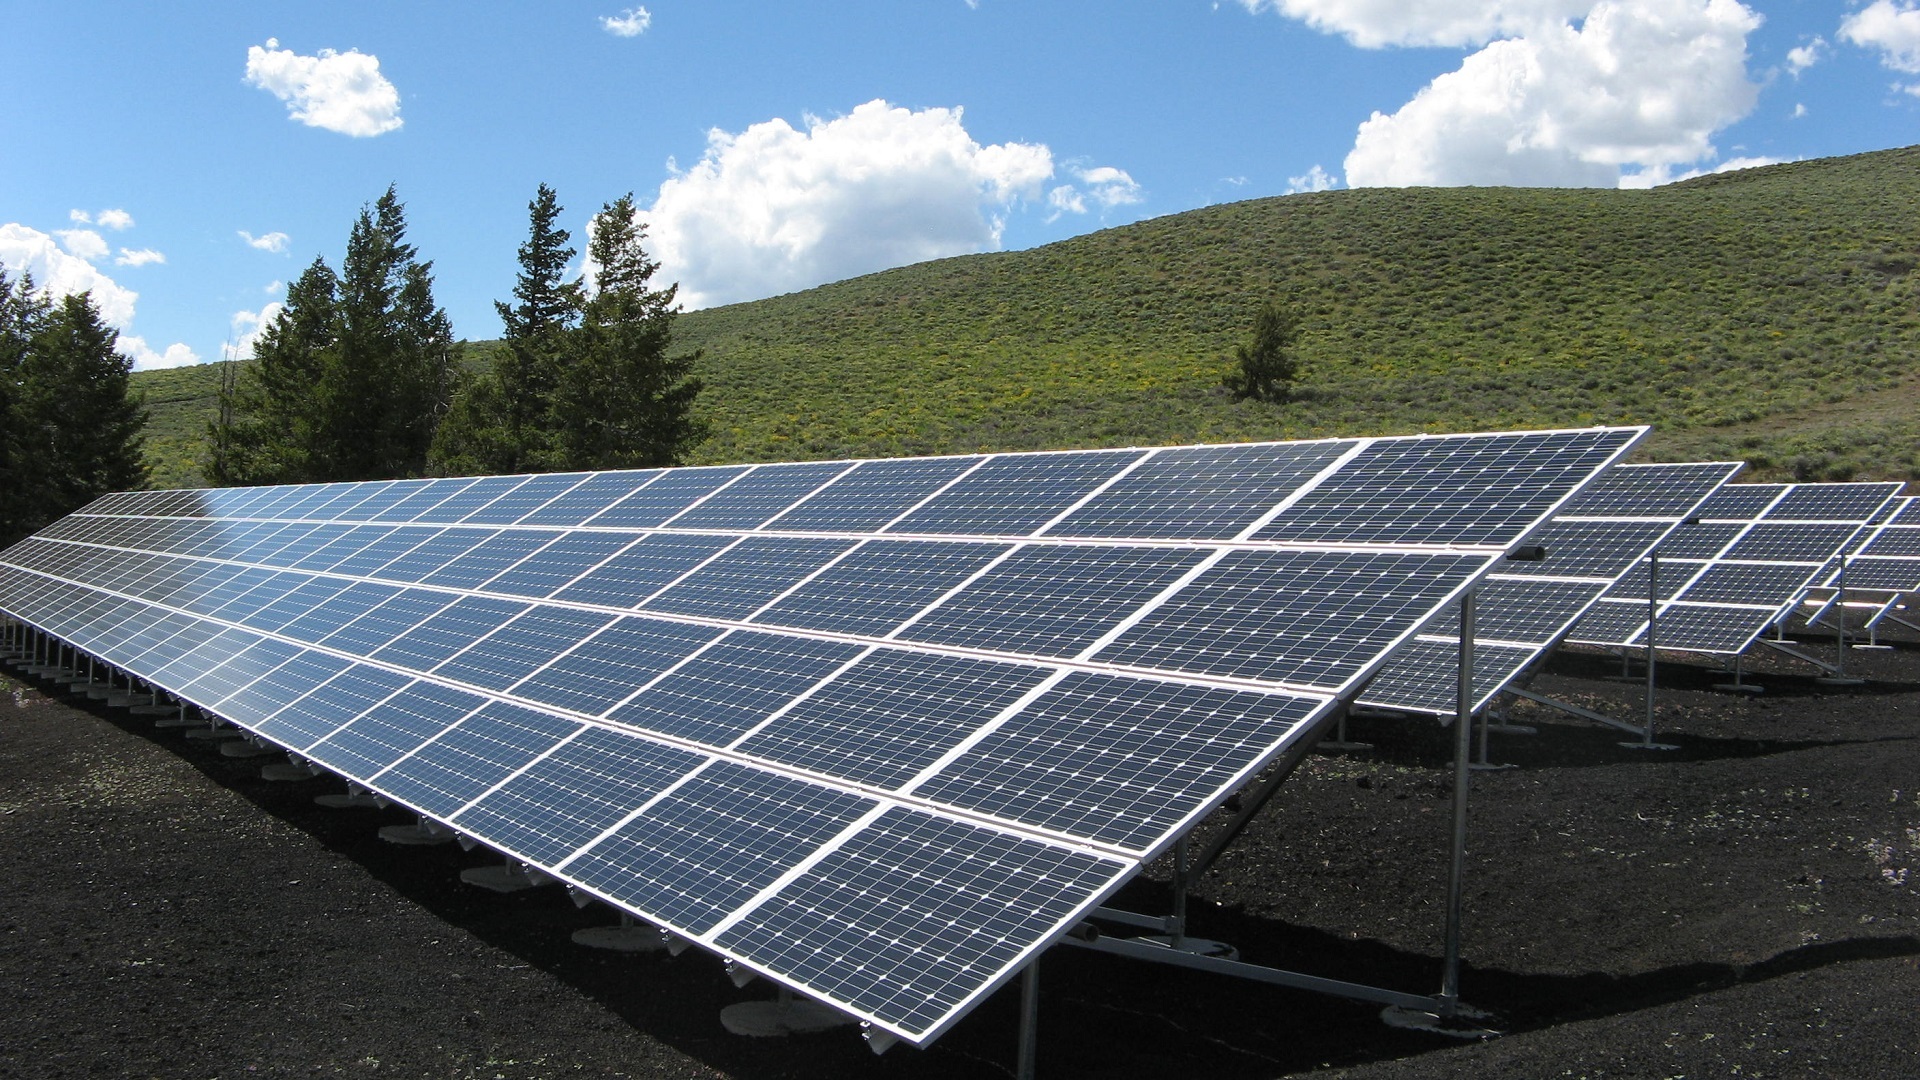 pexels-com-solar-panel-array-power-sun-electricity-159397.jpg